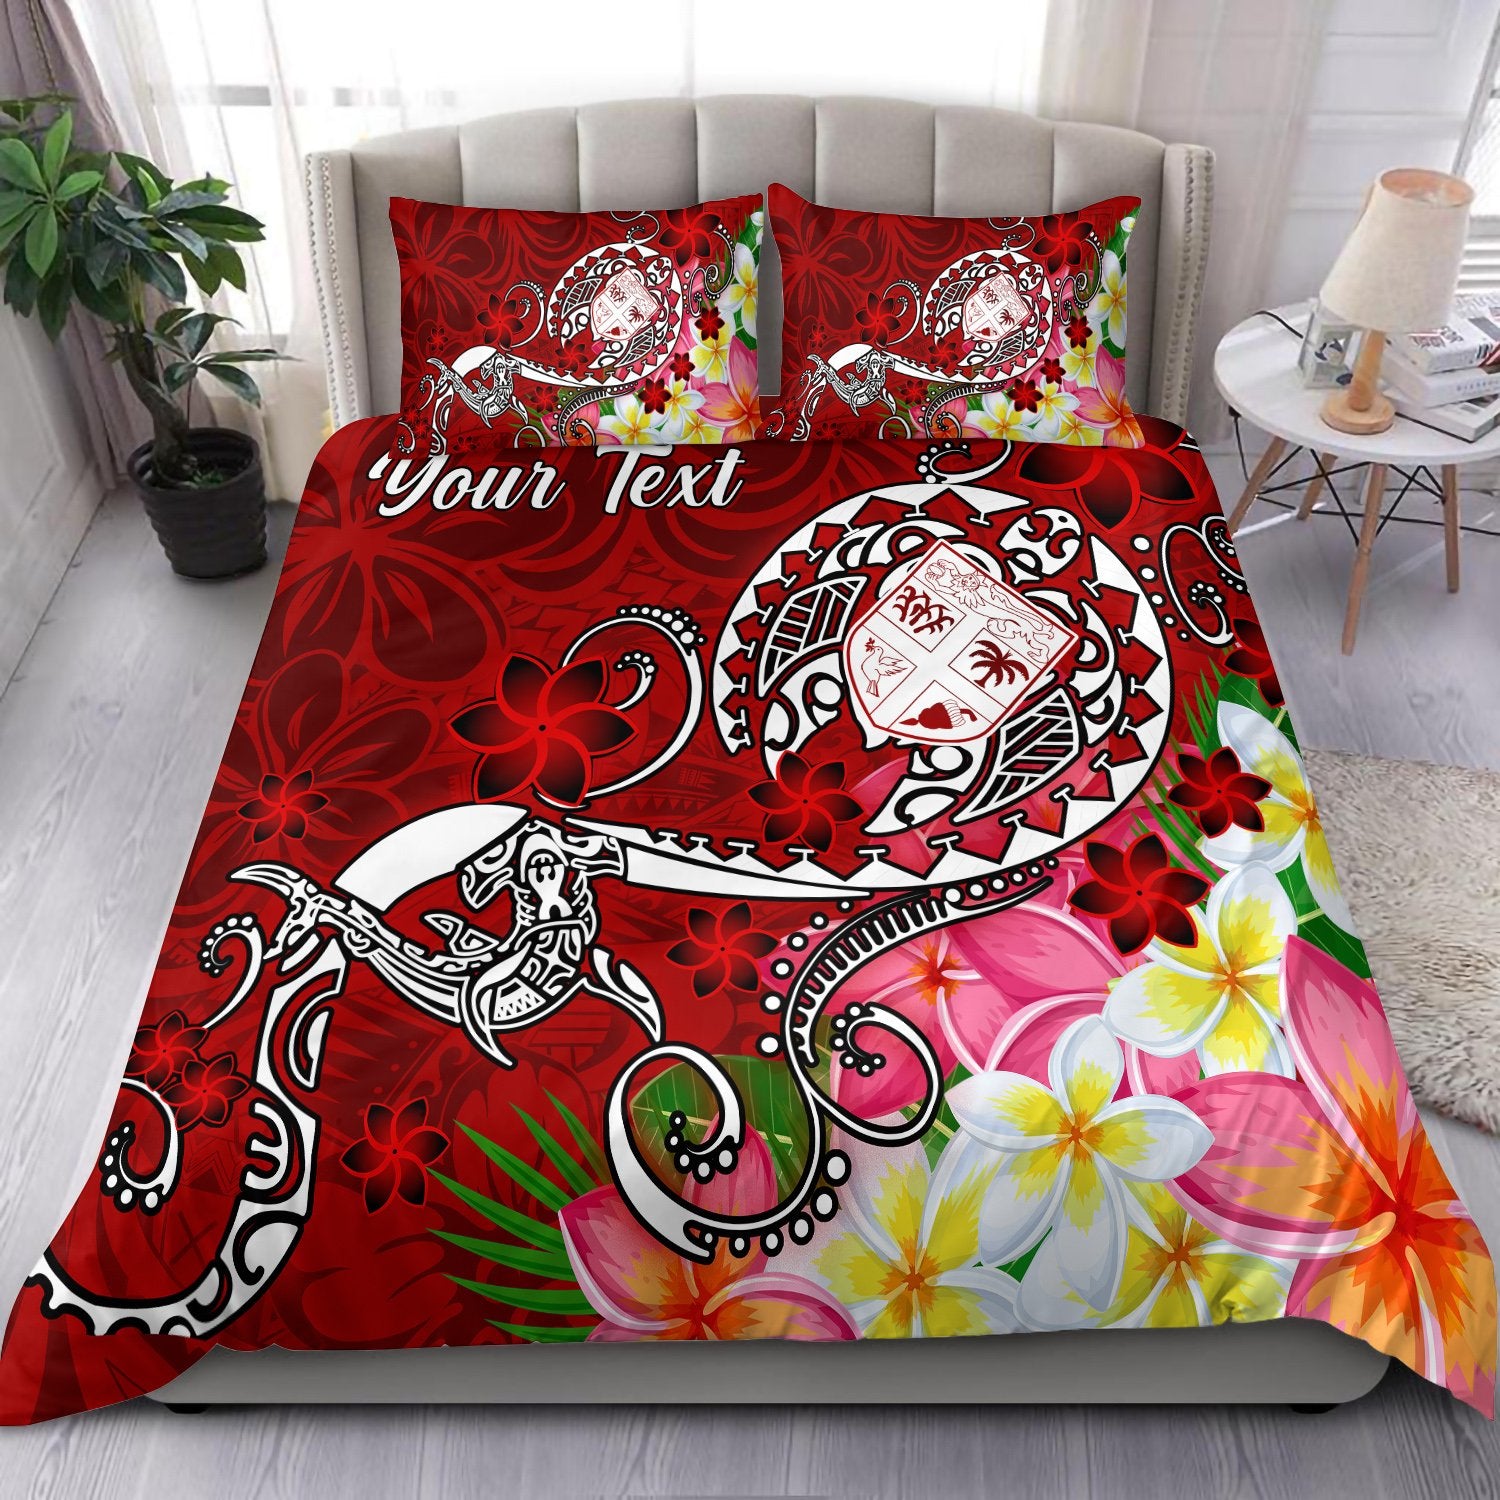 Fiji Custom Personalised Bedding Set - Turtle Plumeria (Red) Red - Polynesian Pride